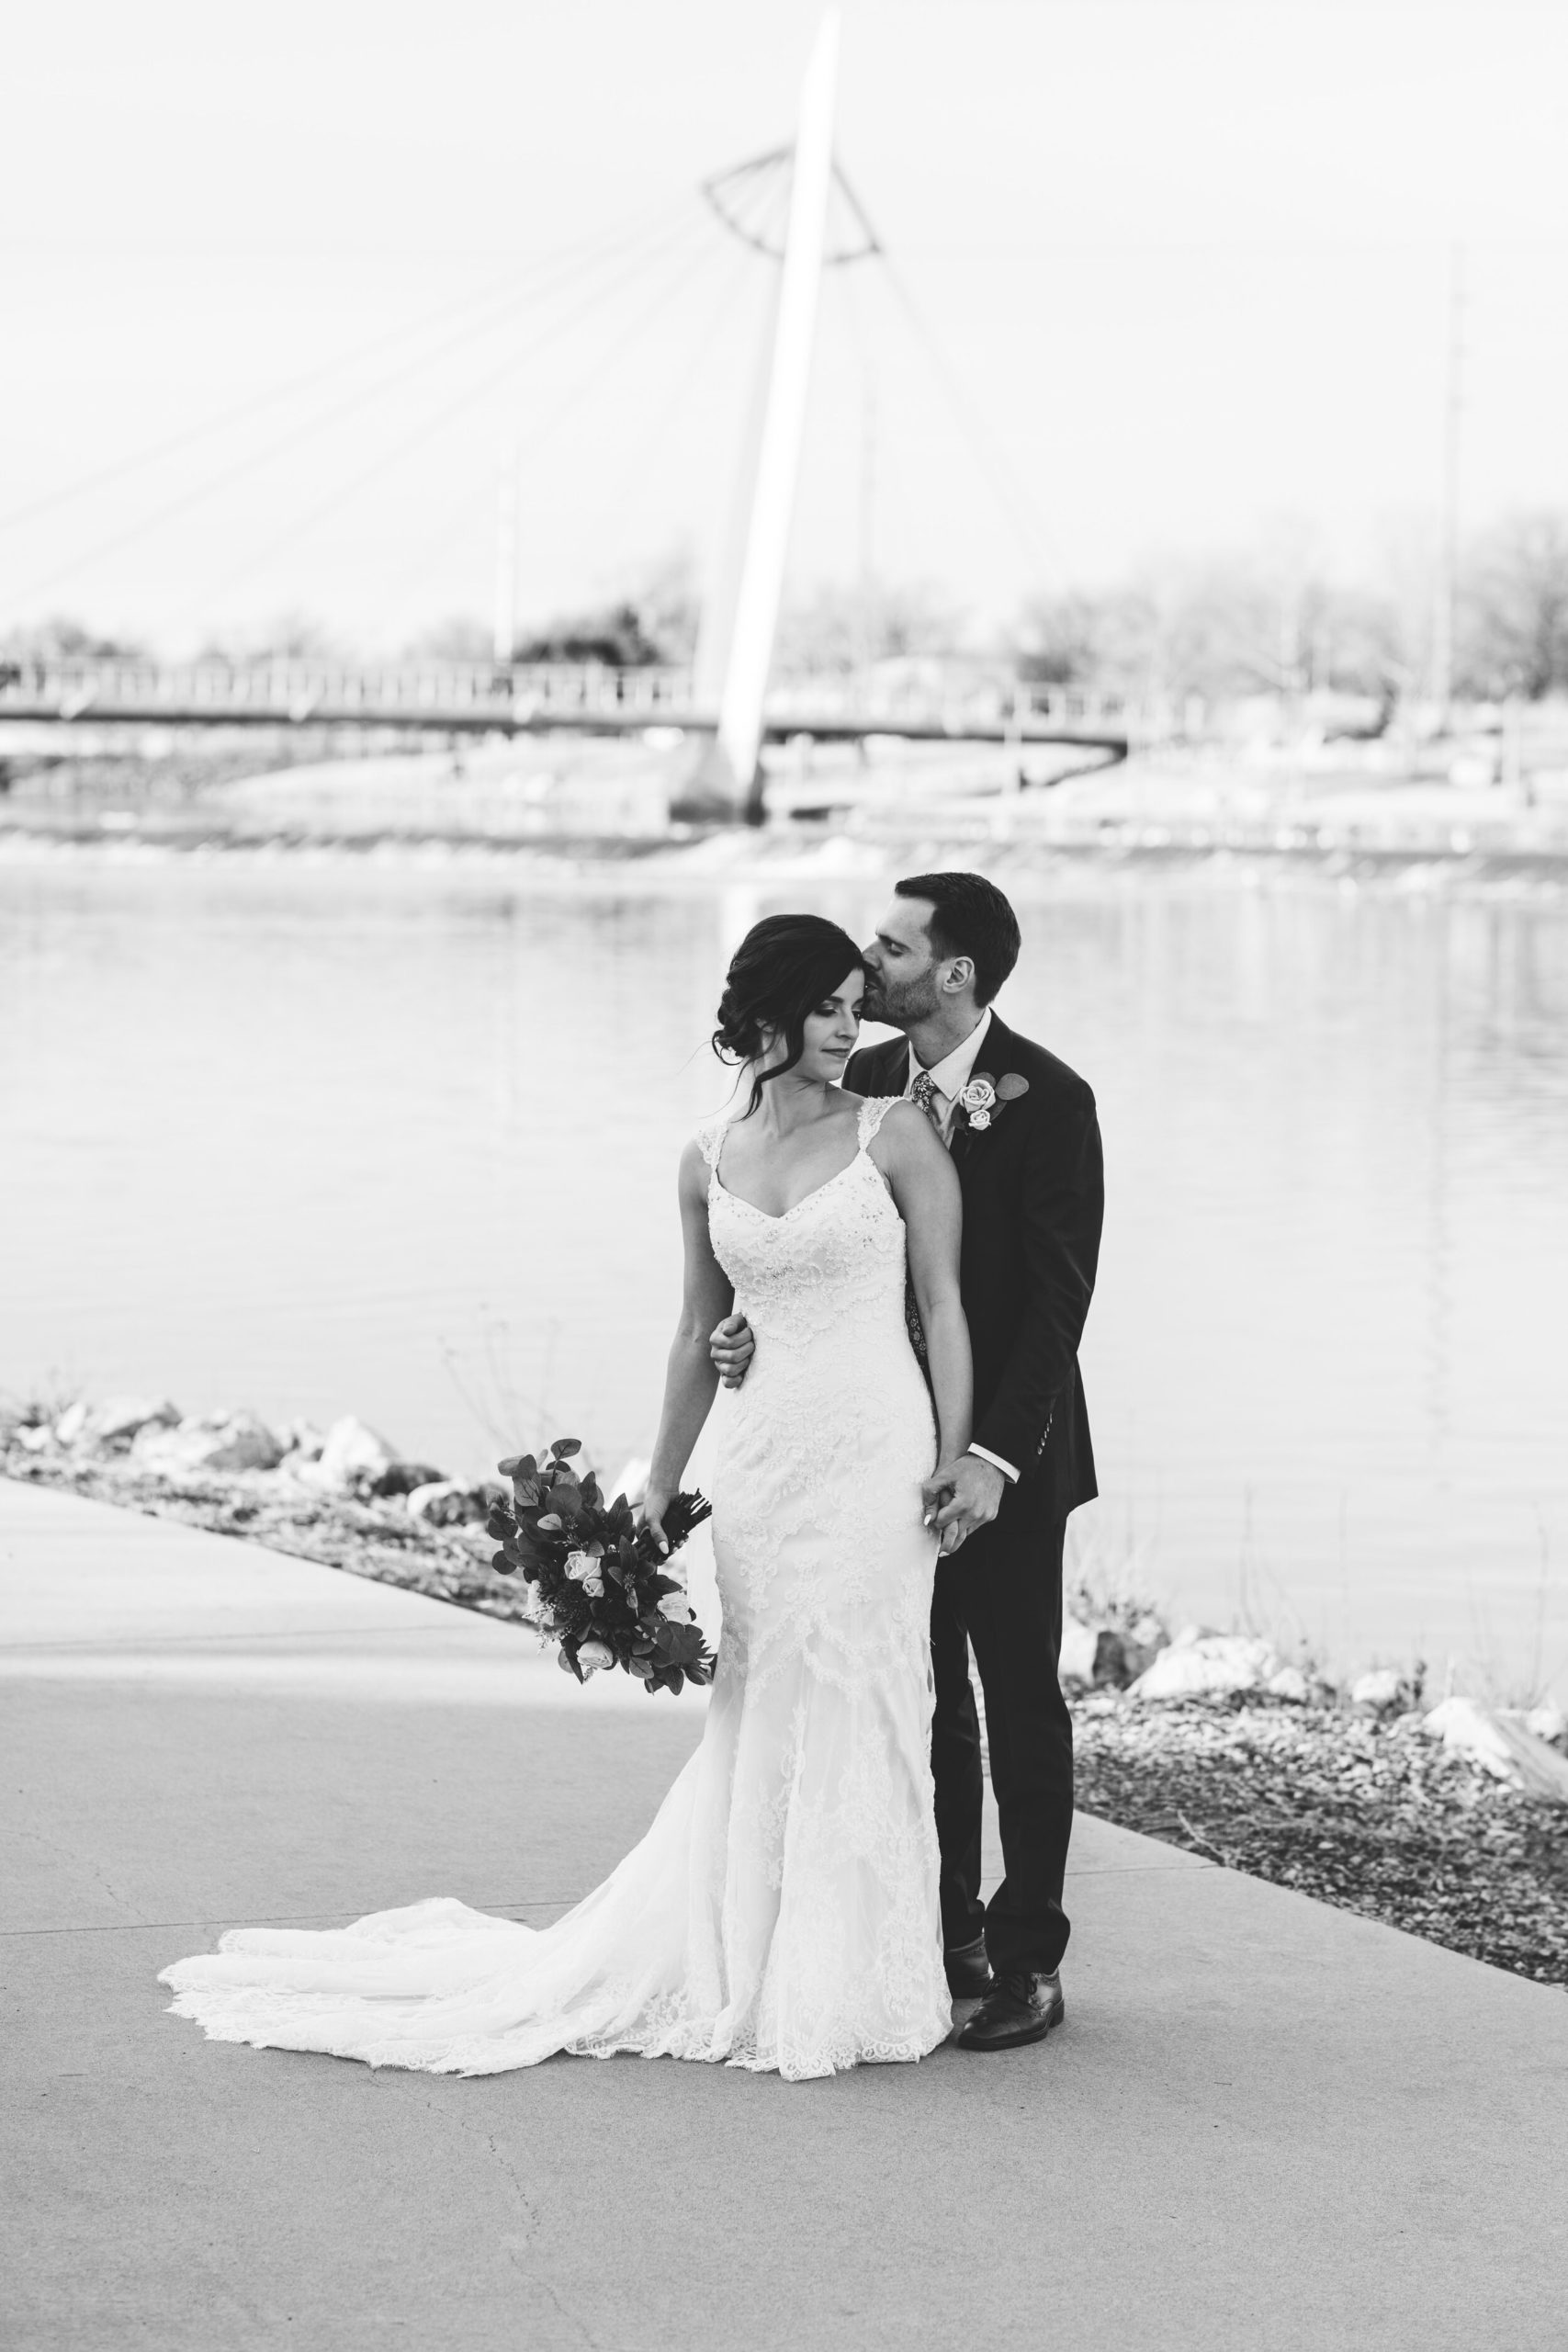 Brooke & John Pine - Modern Winter Wedding at The Exploration Place Wichita, Kansas75.jpg